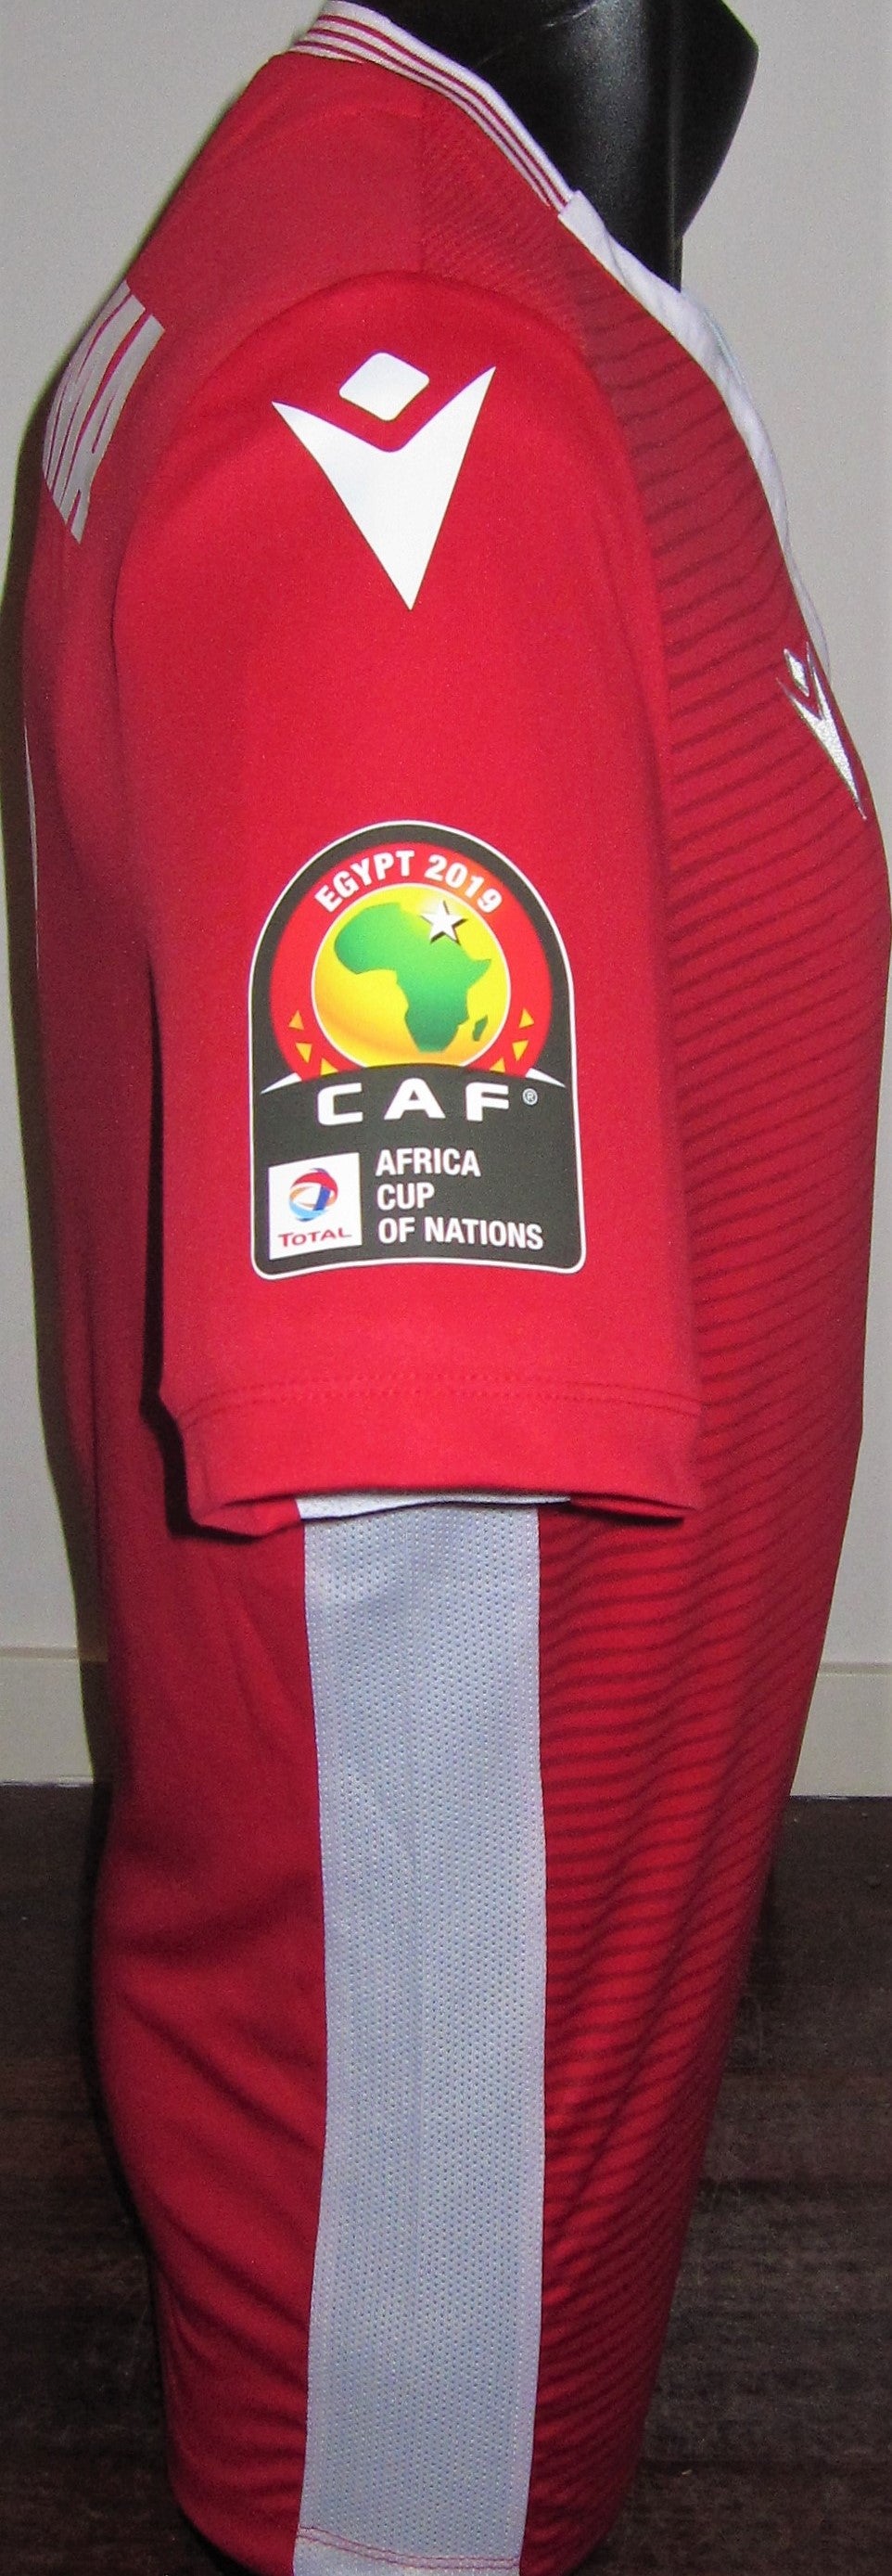 Kenya 2019 Home (WANYAMA #12) Jersey/Shirt